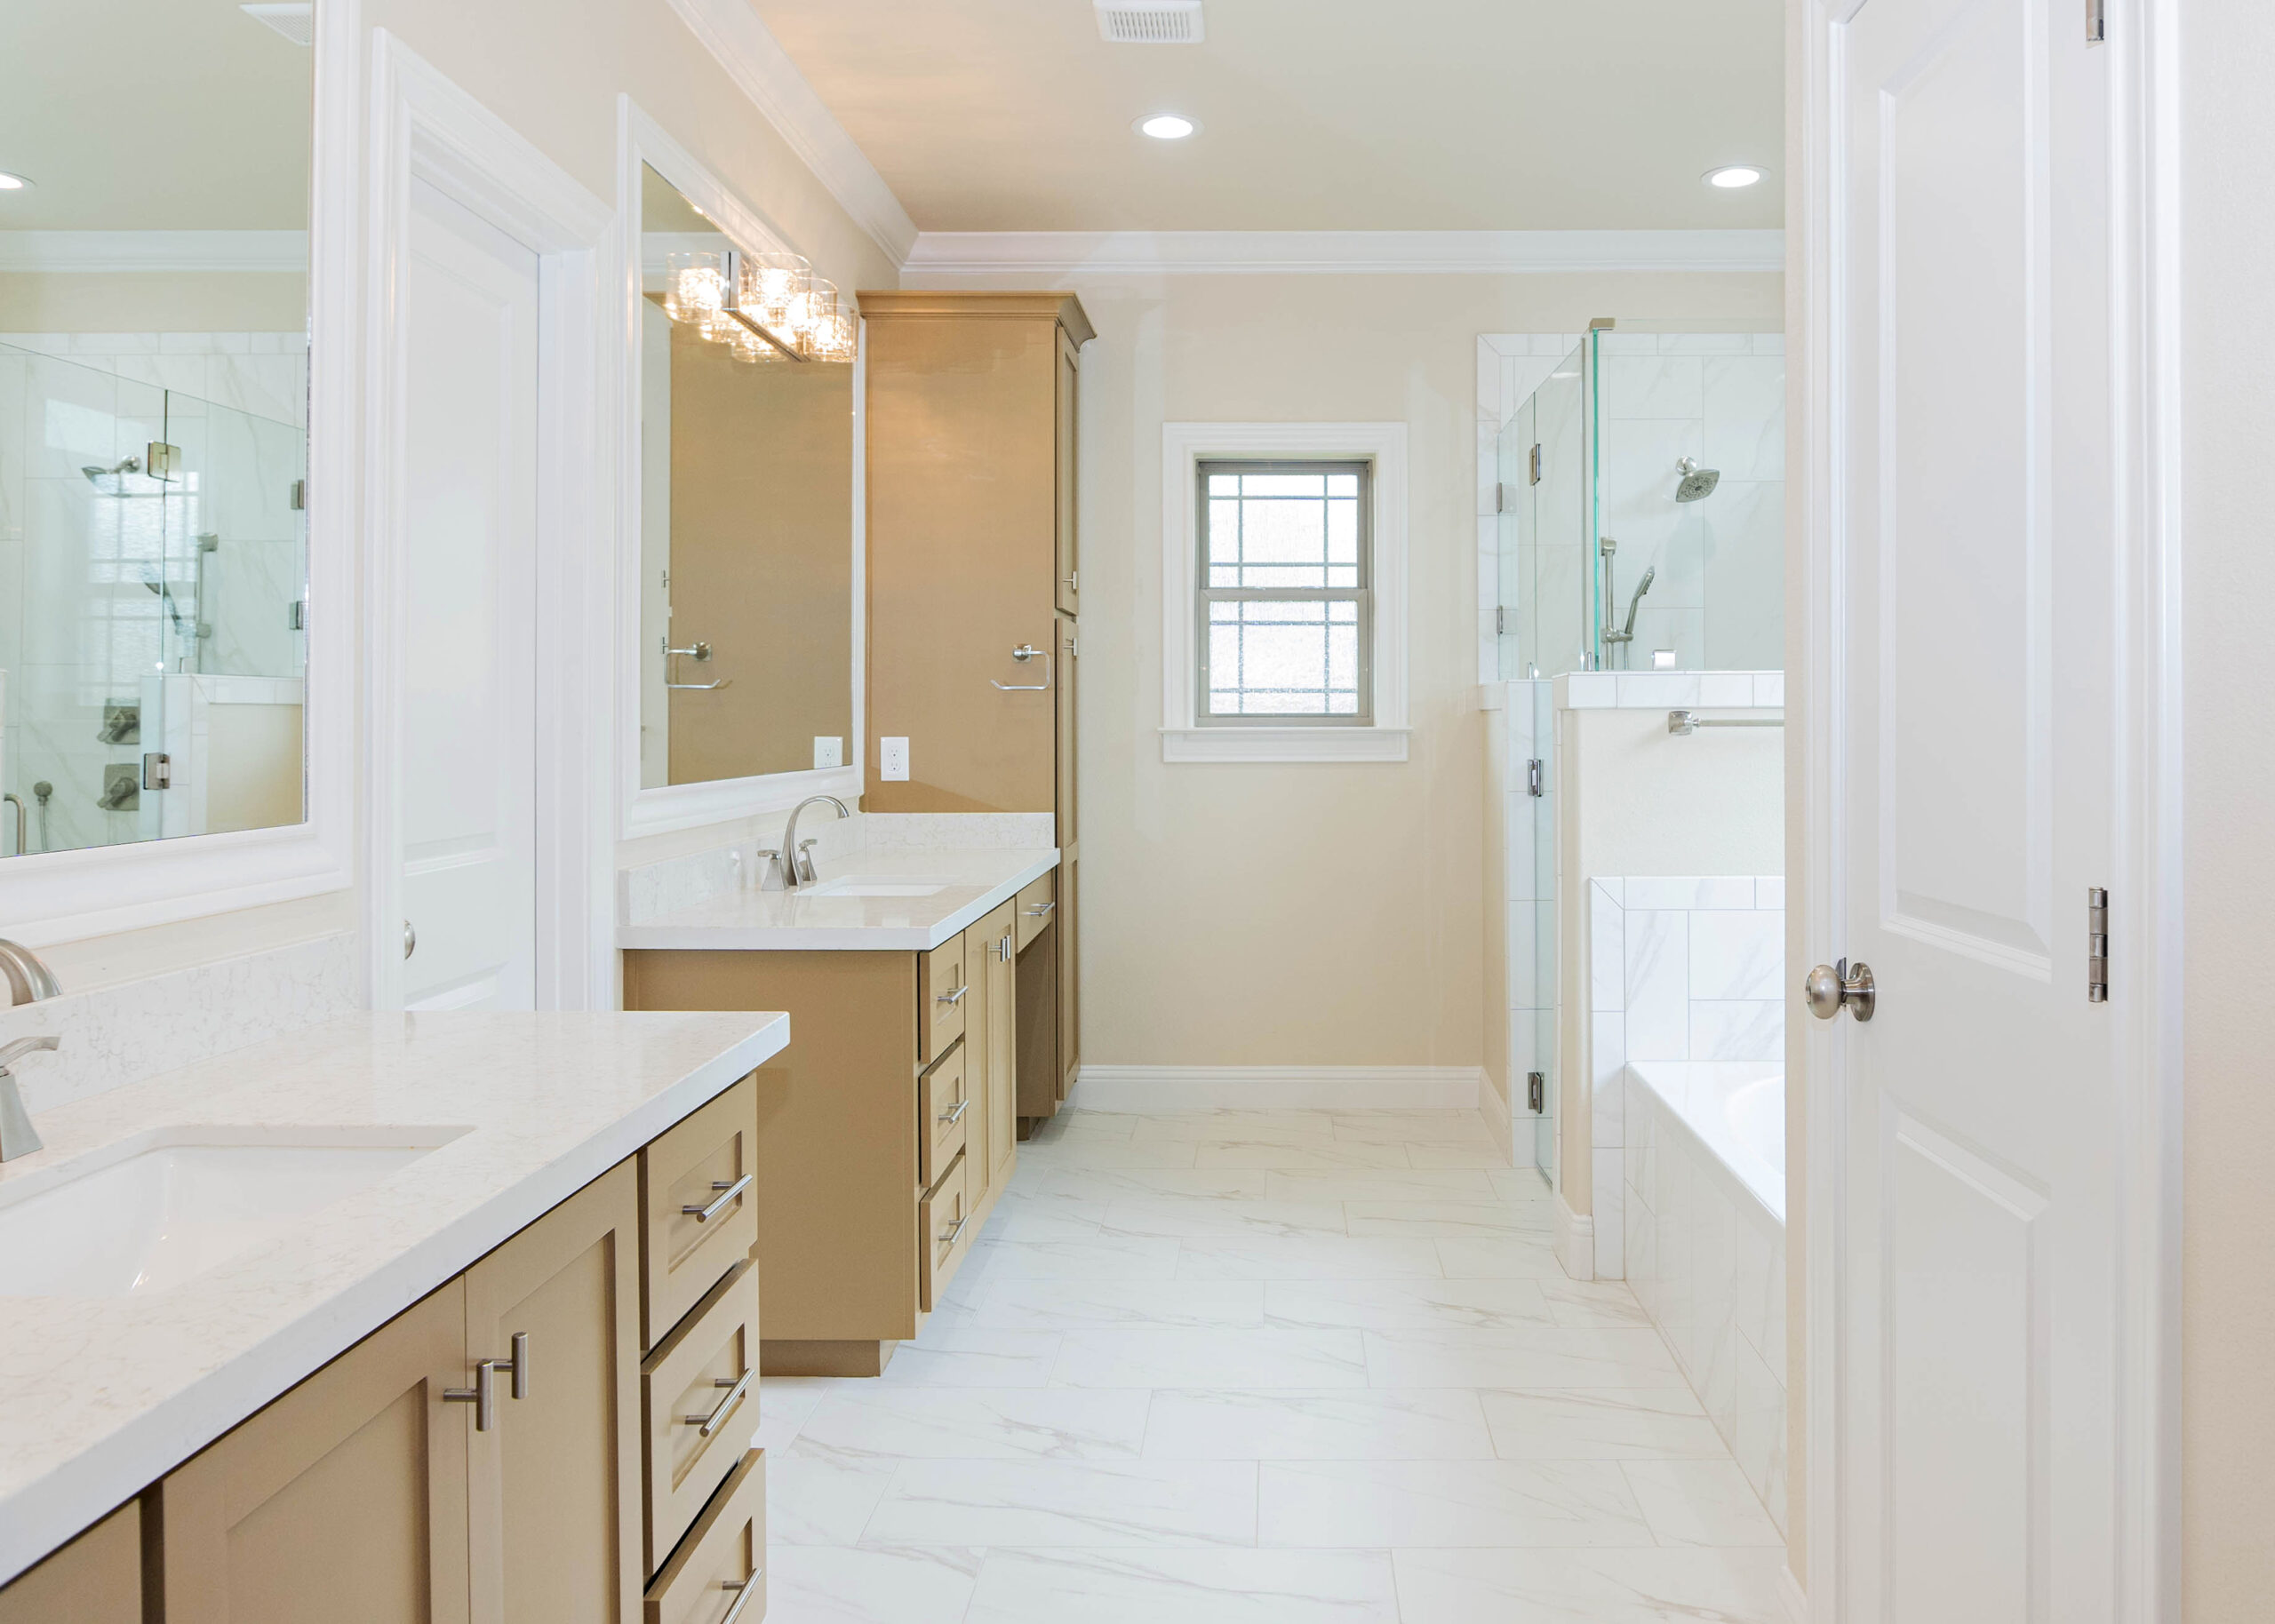 240 Riverstone two story modern home master bathroom white tile flooring brown shaker style cabinets tile tube wrap built in tub